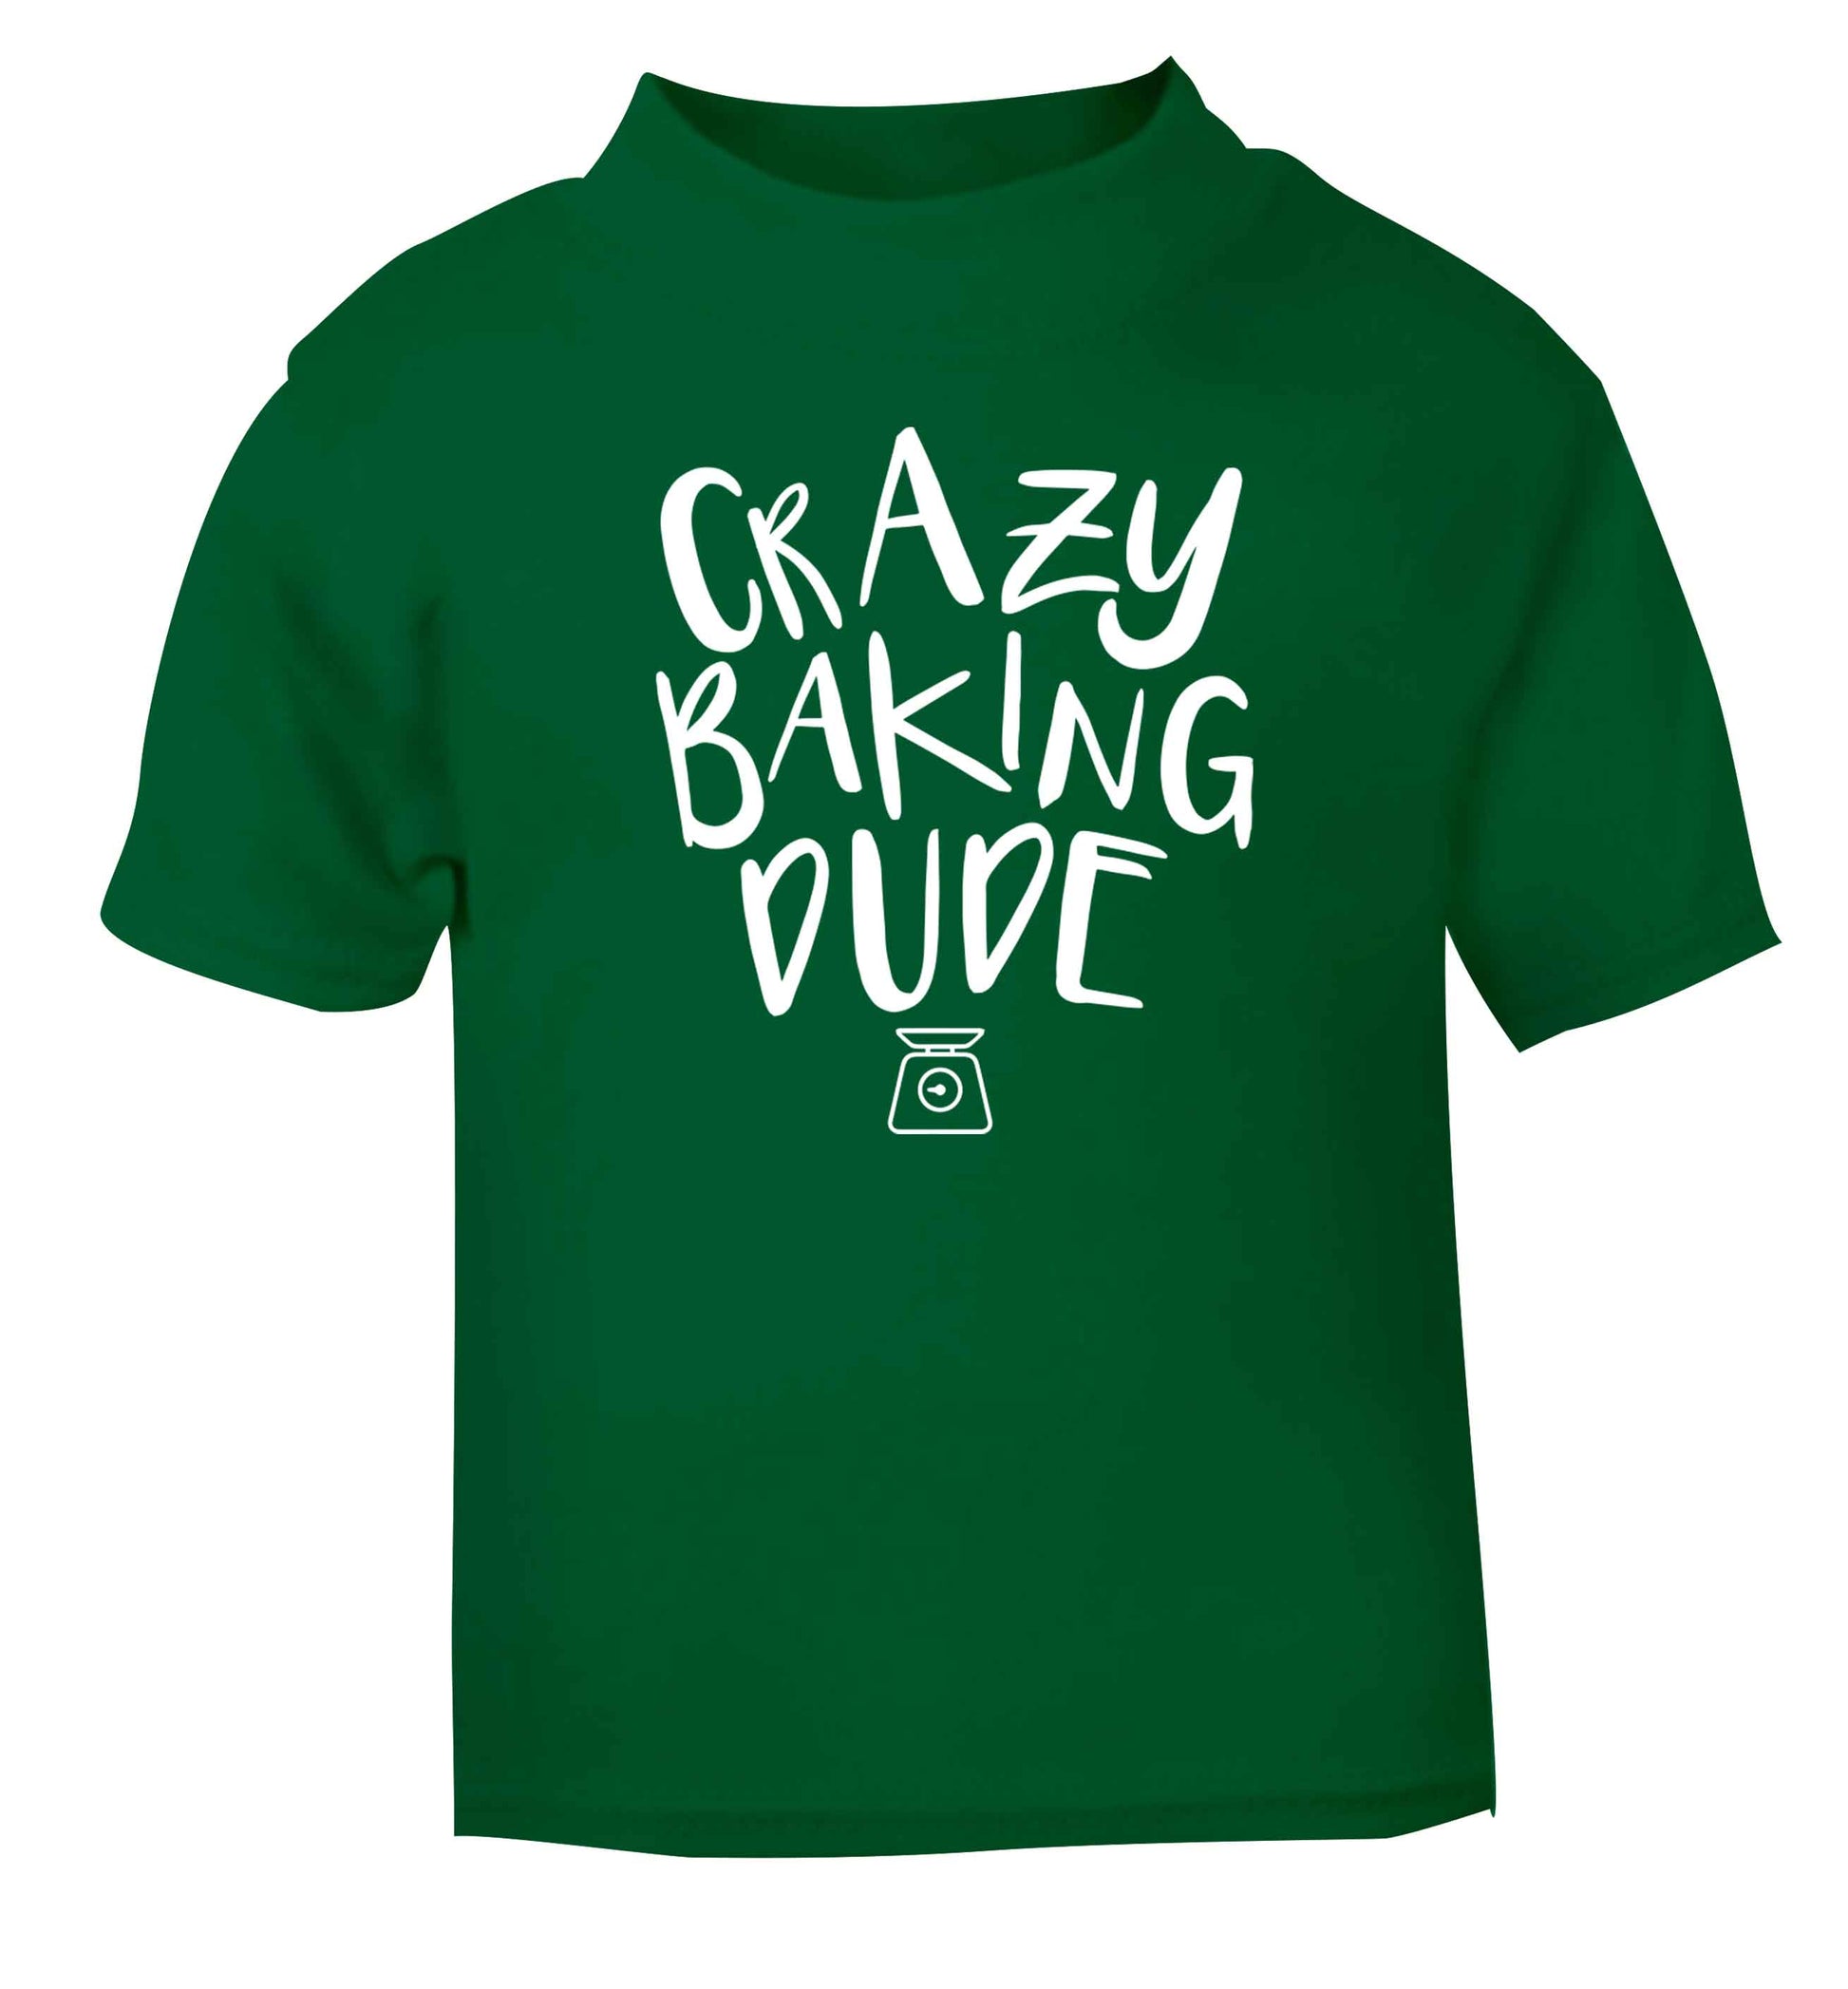 Crazy baking dude green Baby Toddler Tshirt 2 Years